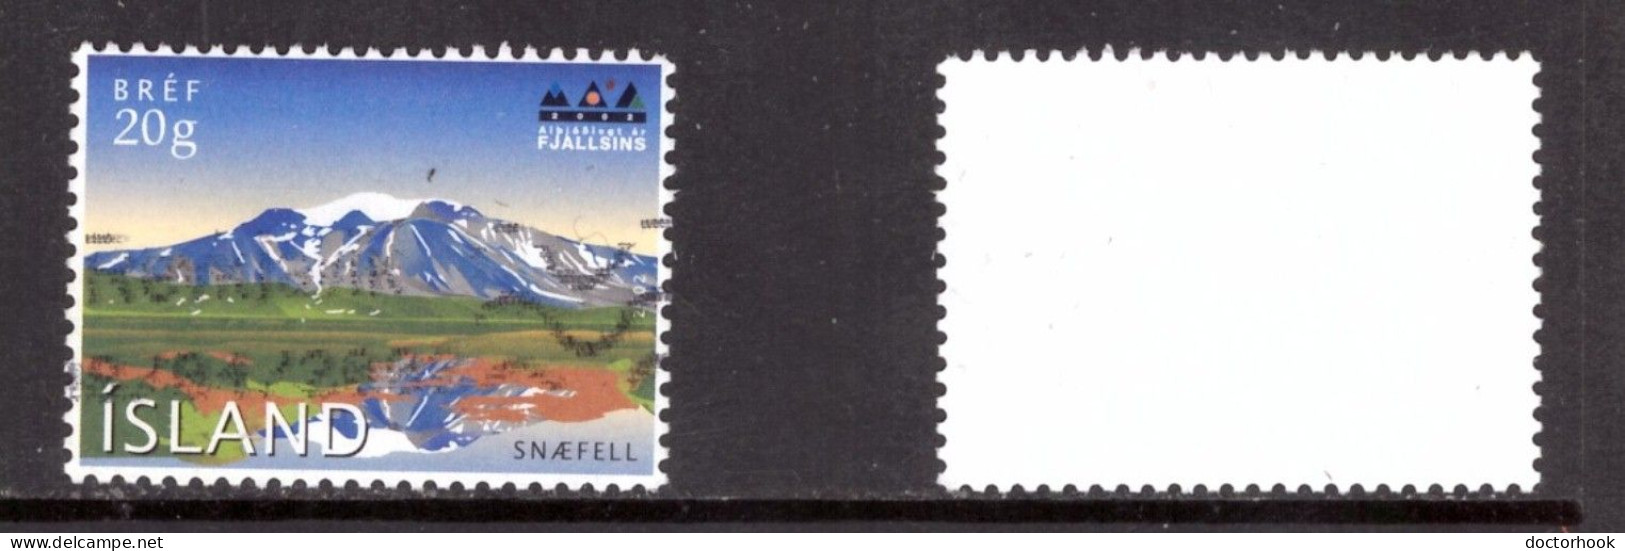 ICELAND   Scott # 959 USED (CONDITION AS PER SCAN) (Stamp Scan # 967-5) - Gebraucht